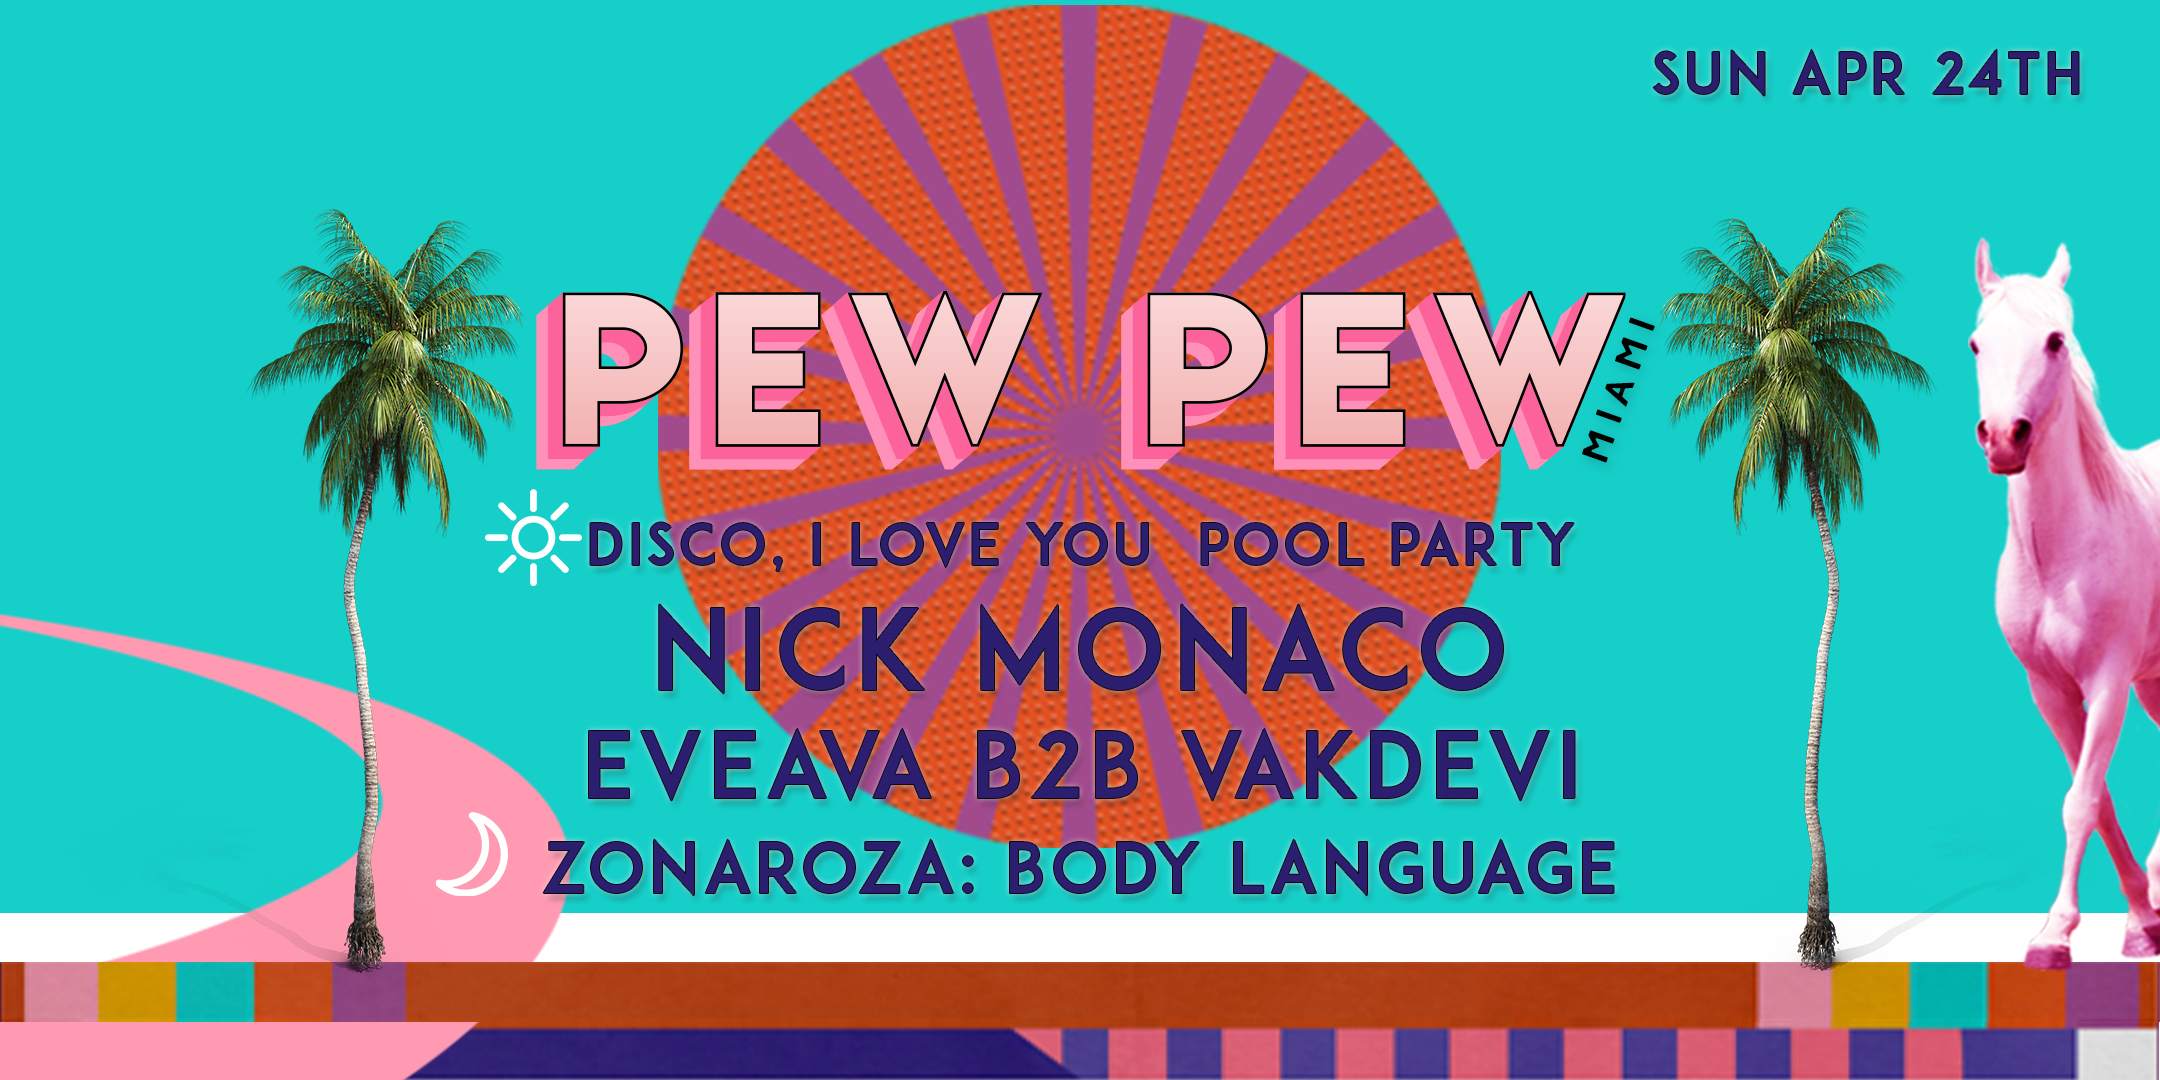 Pew Pew x Disco, I love you feat. Nick Monaco, eveava & Vakdevii - フライヤー表